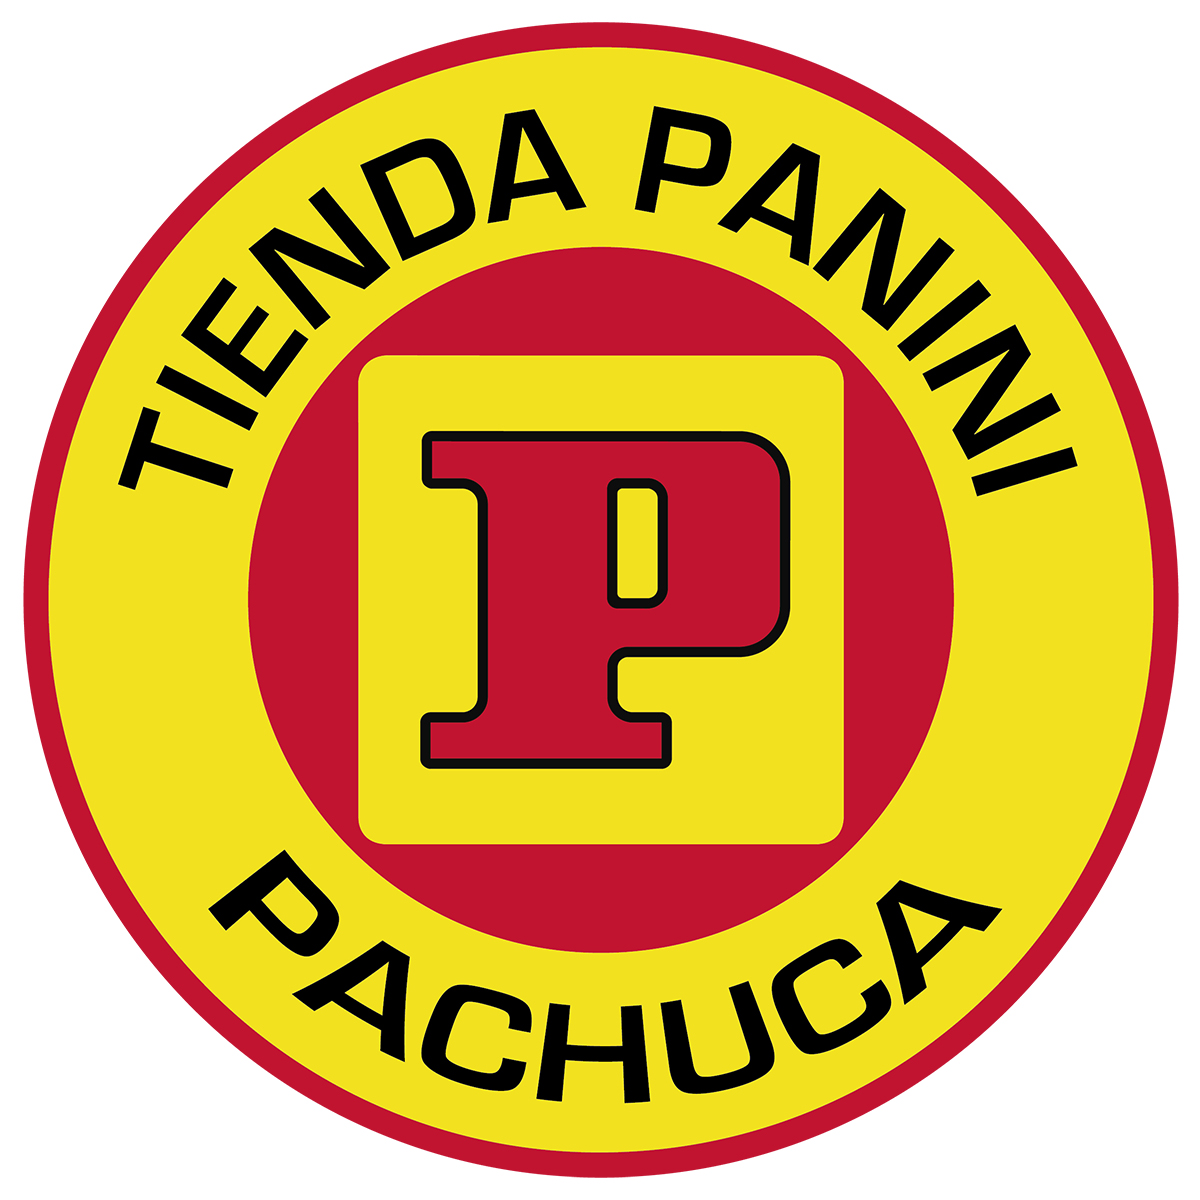 Plaza Revo Pachuca, <B>L103</B> - TIENDA PANINI PACHUCA